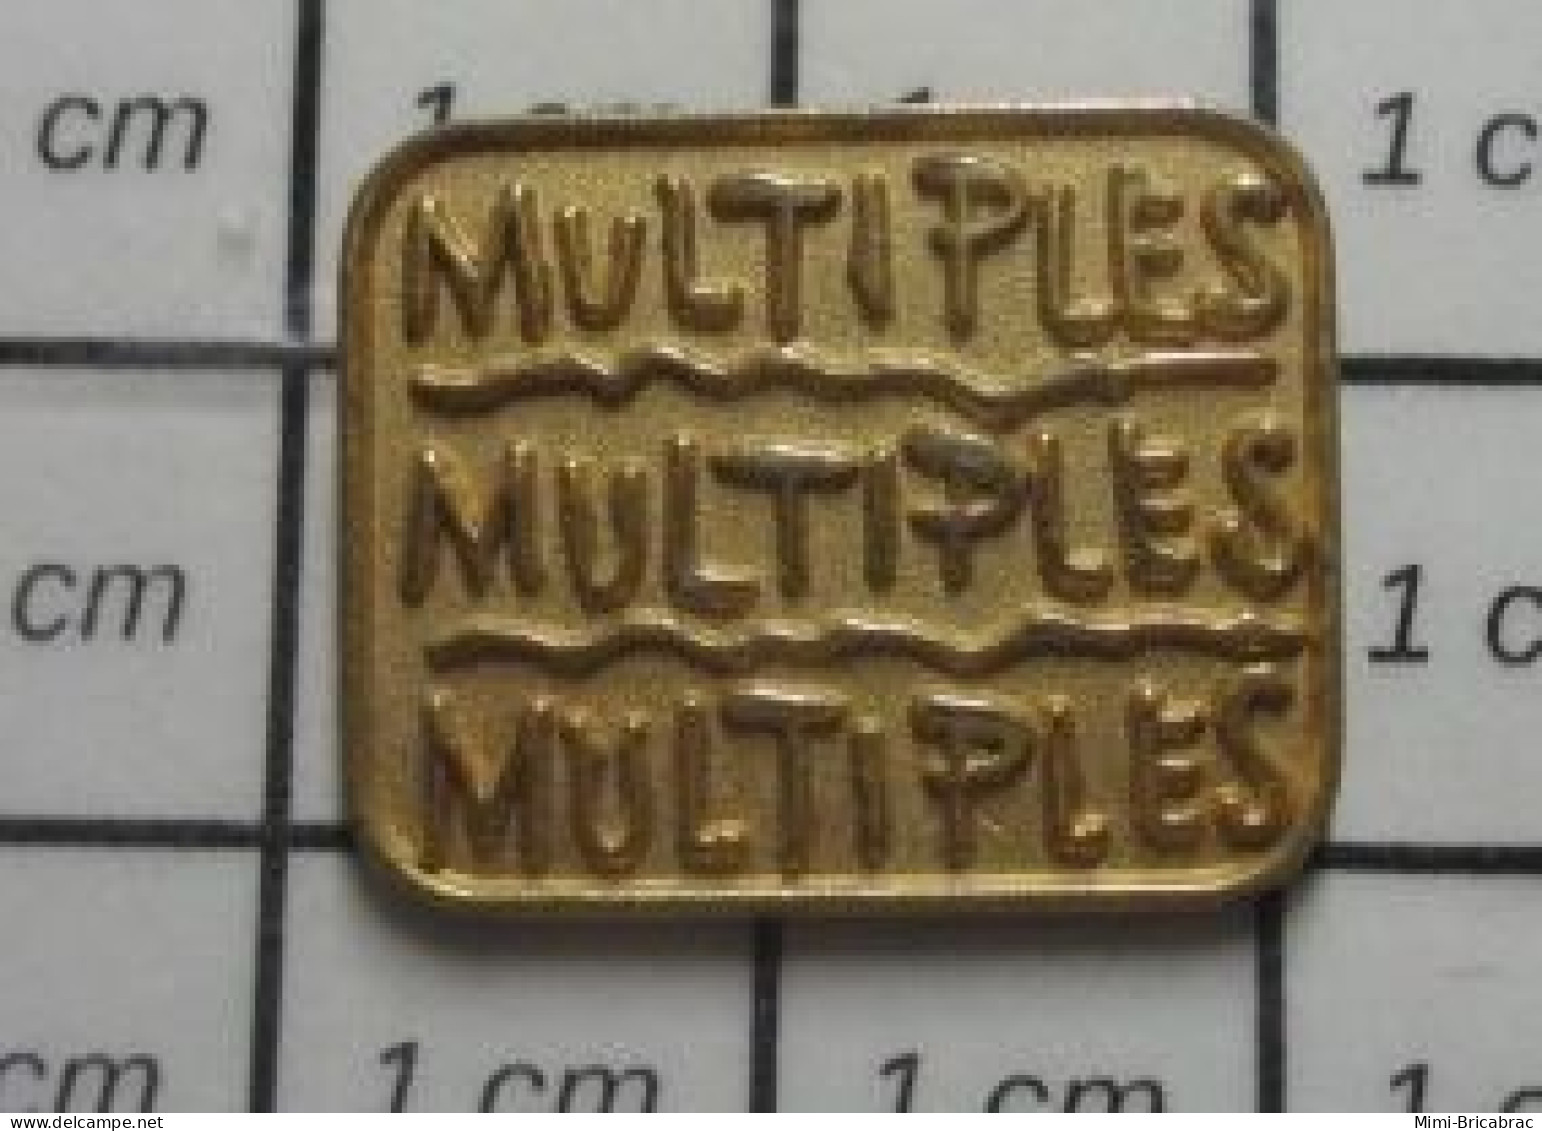 912E Pin's Pins / Beau Et Rare / MARQUES / TOUT METAL JAUNE MULTIPLES MULTIPLES MULTIPLES Ok On A Compris ! - Marques